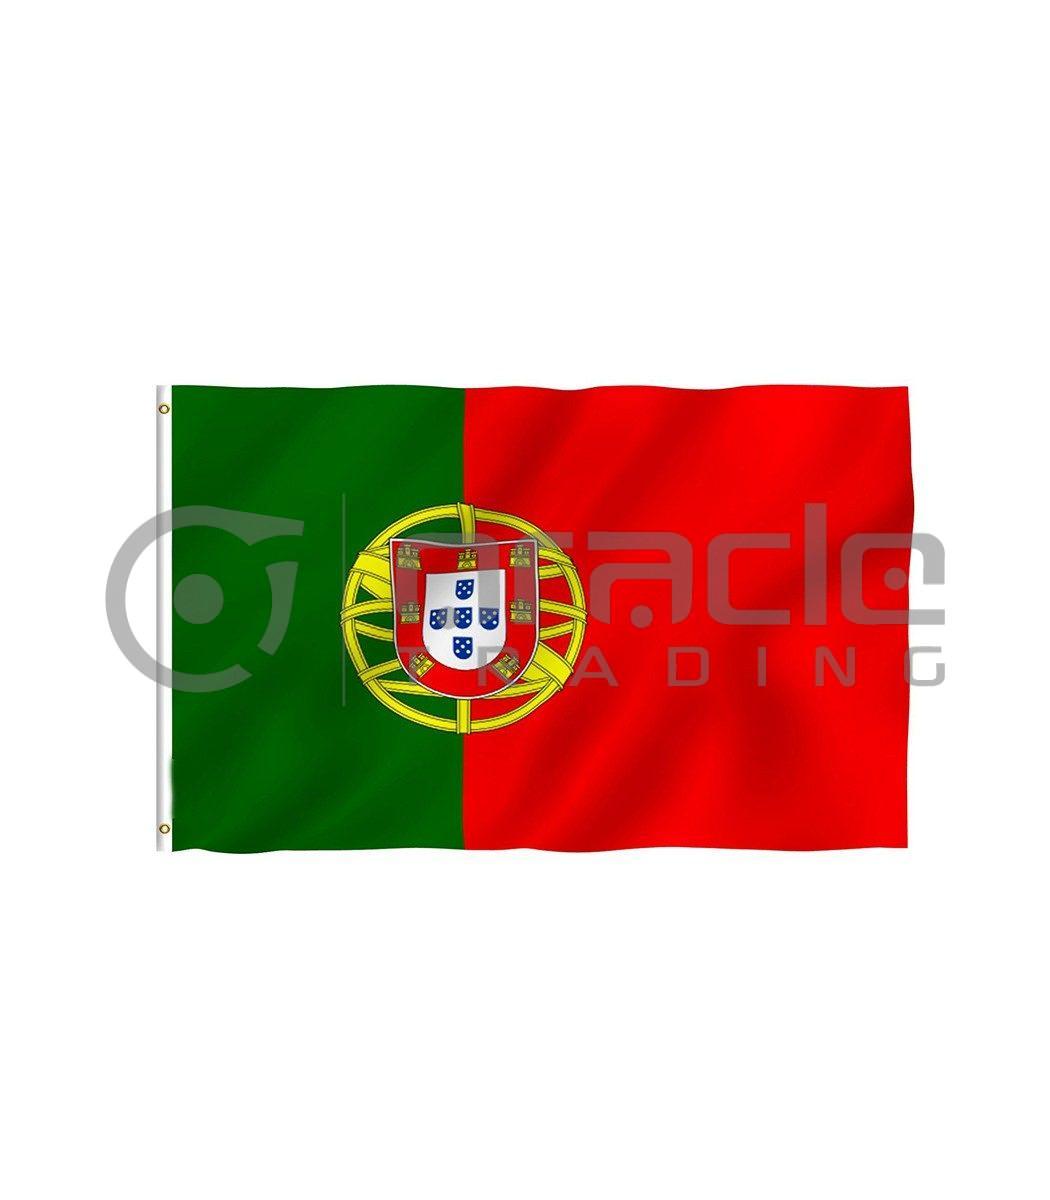 Large 3'x5' Portugal Flag